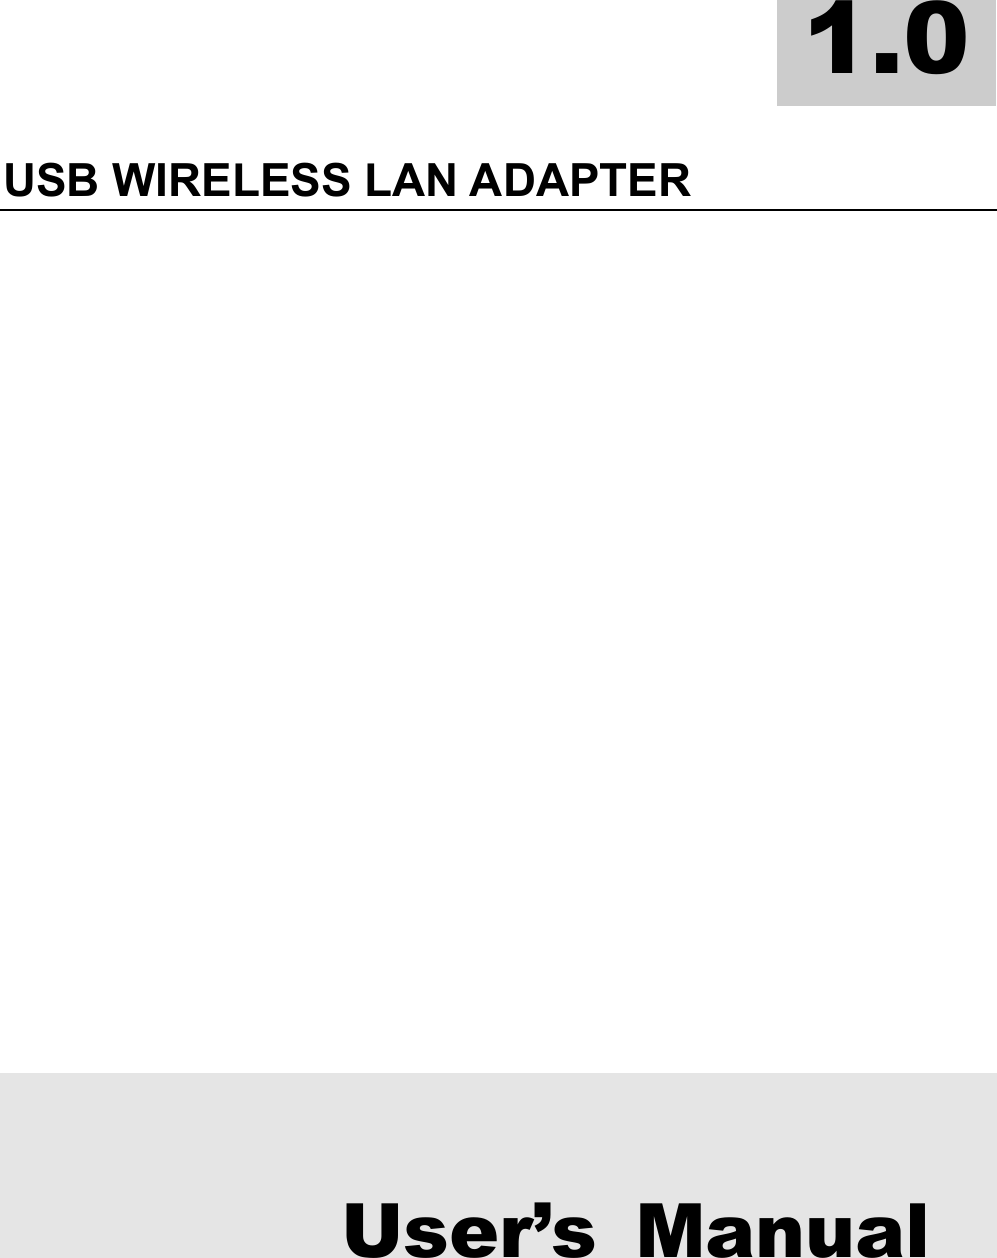 USB WIRELESS LAN ADAPTER           User’s Manual1.0 